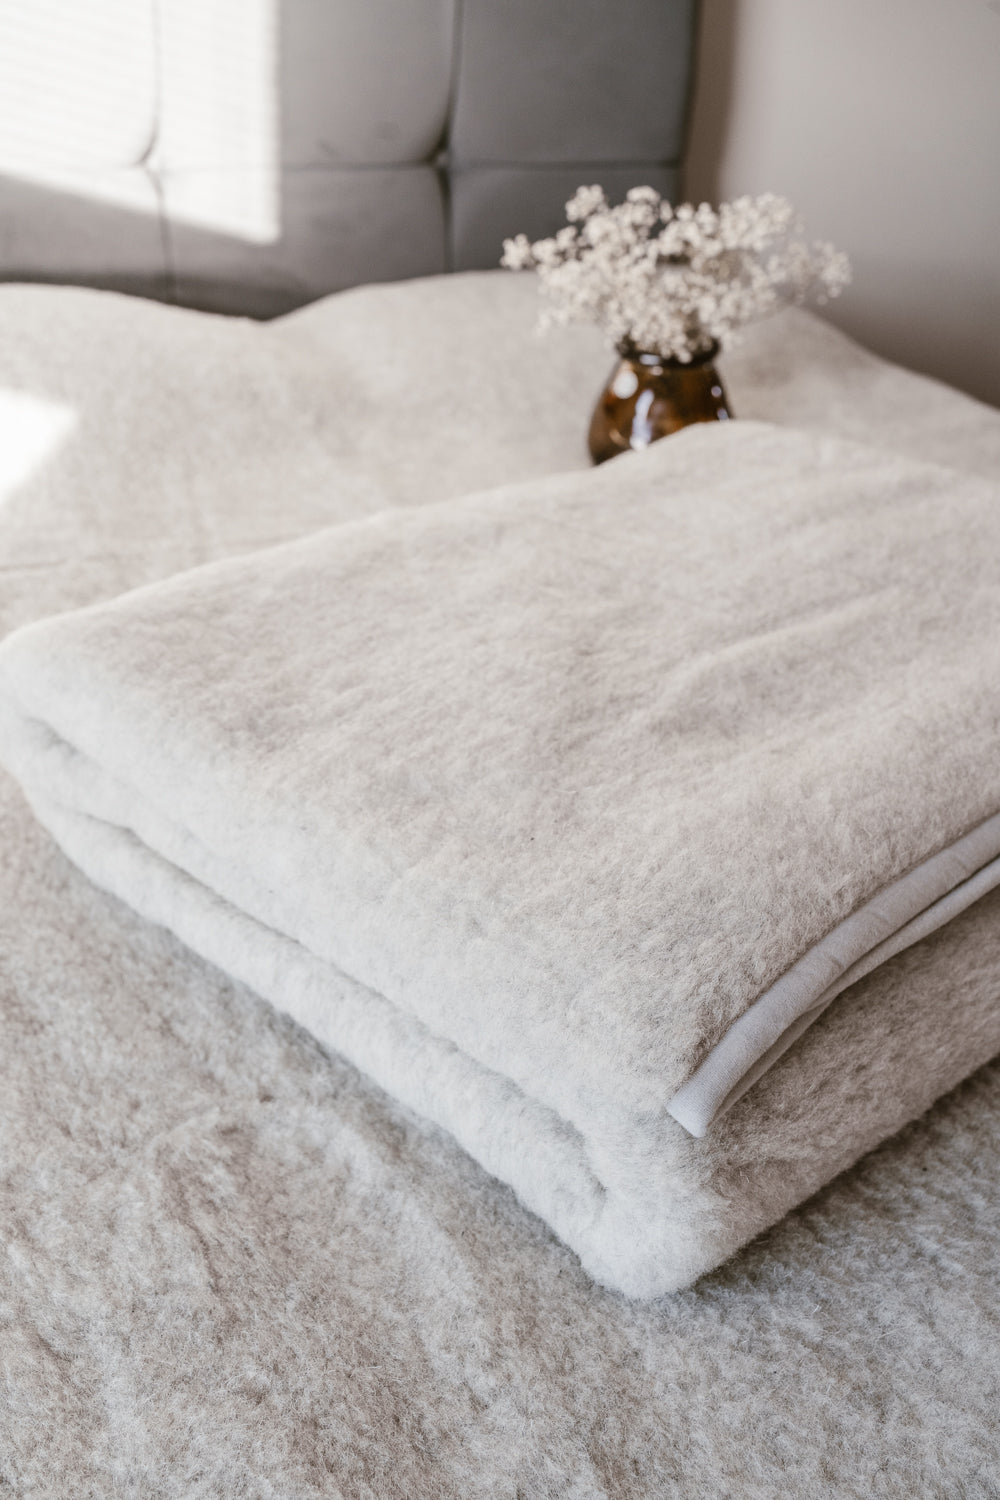 Woollen bed cover, duvet, merino wool blanket in grey colour